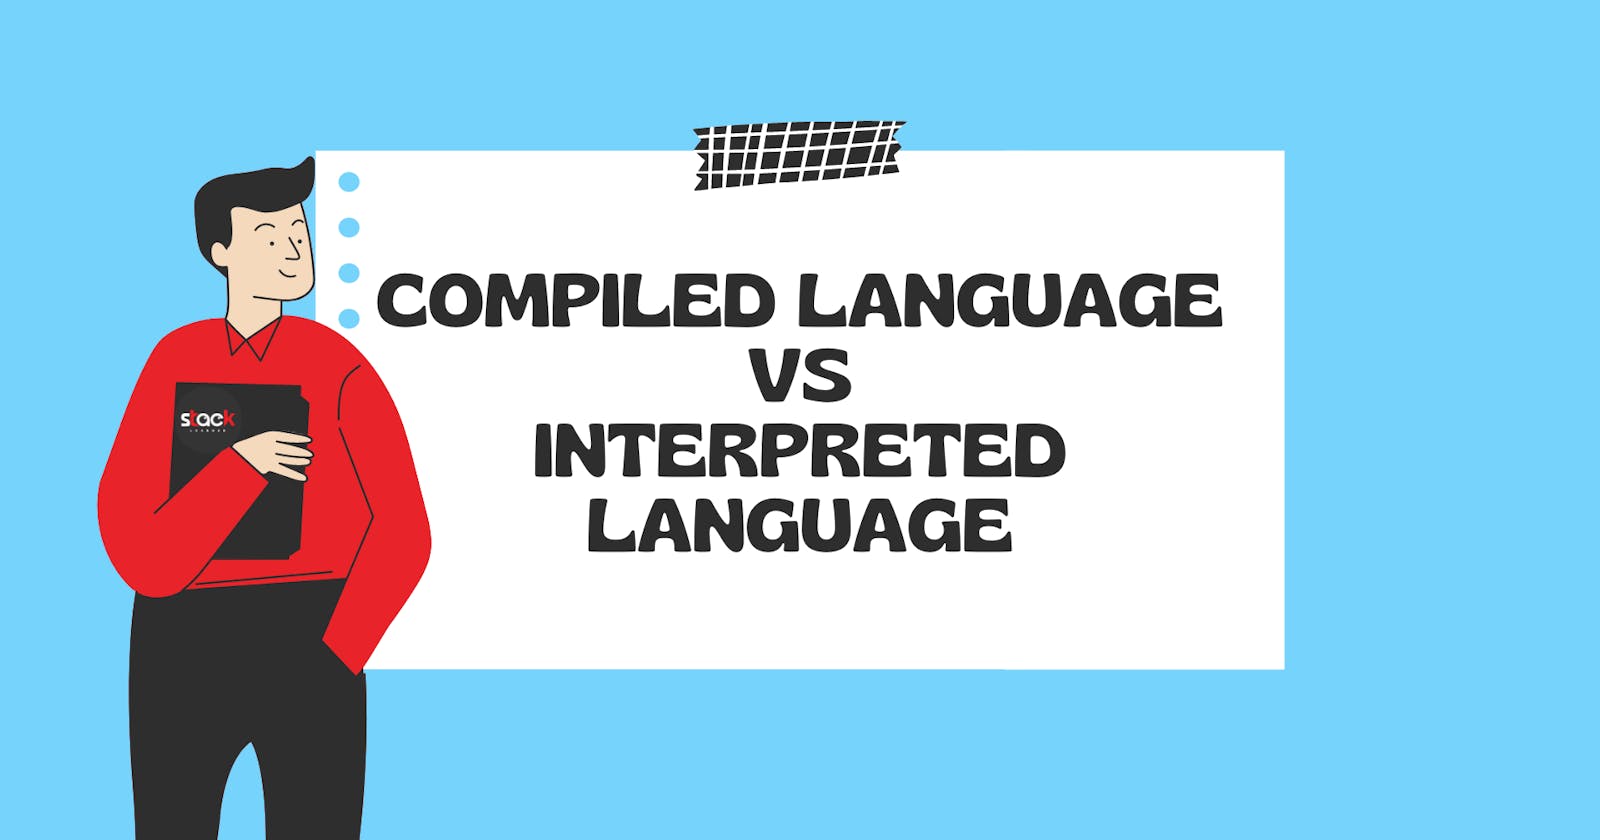 Compiled Language vs Interpreted Language